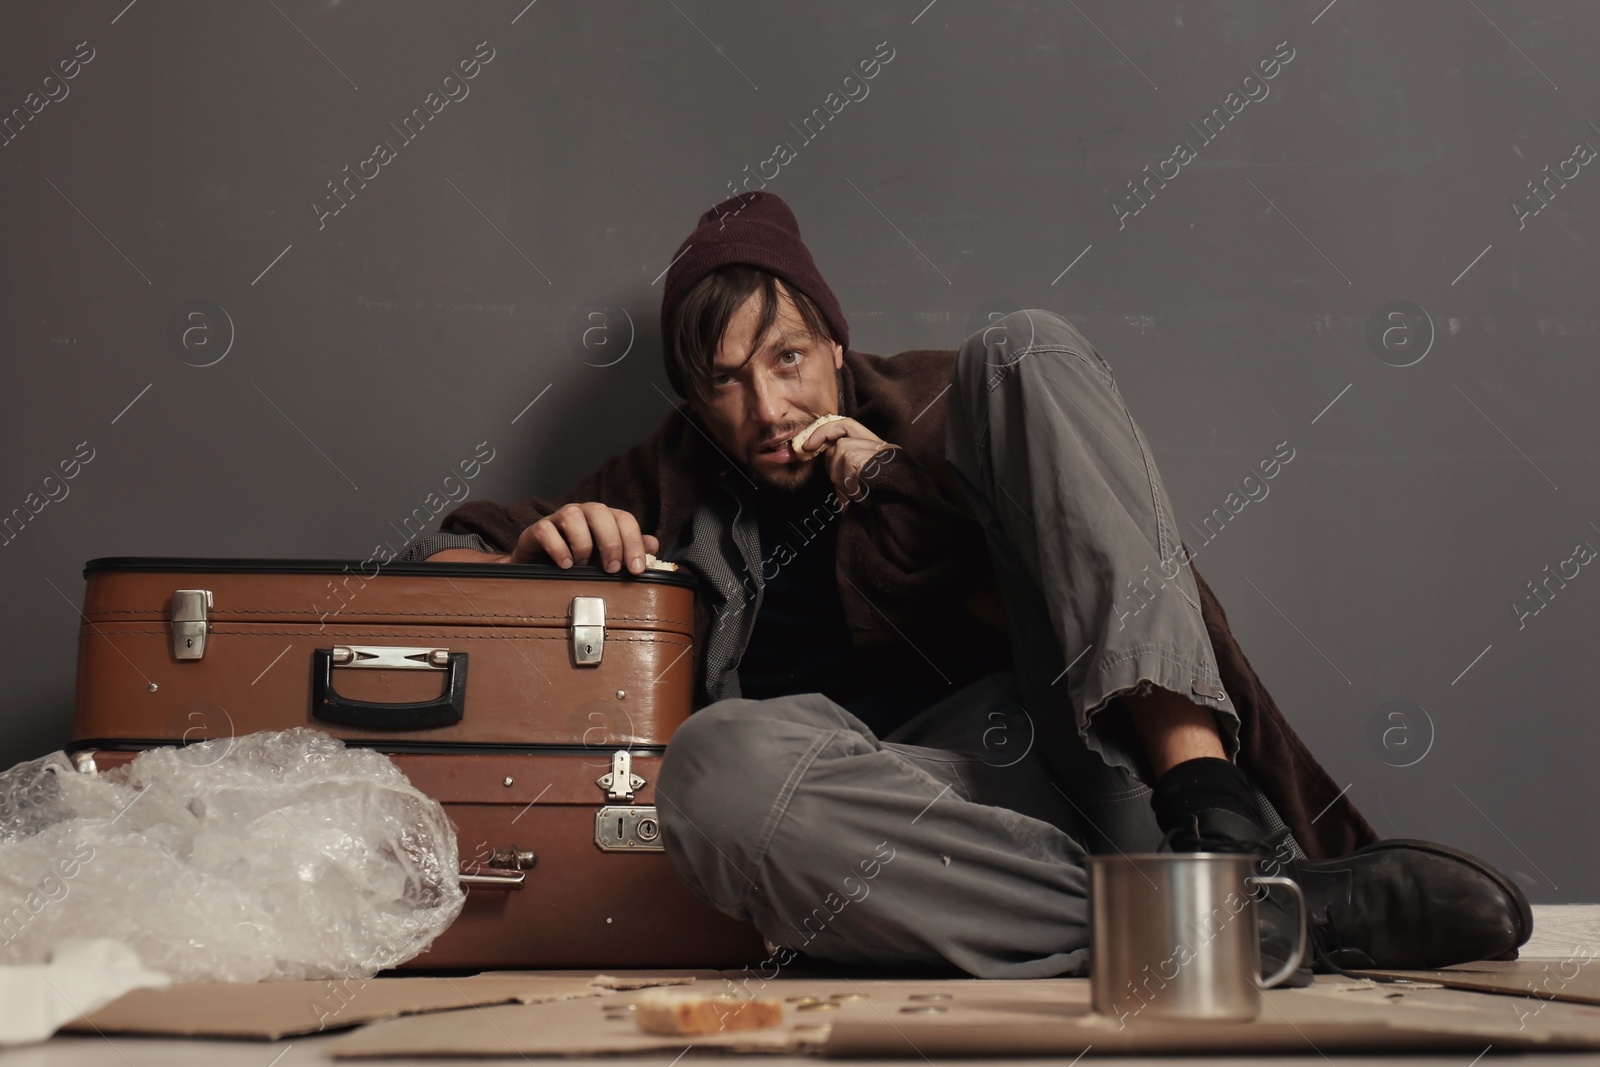 Photo of Poor homeless man eating on floor near dark wall